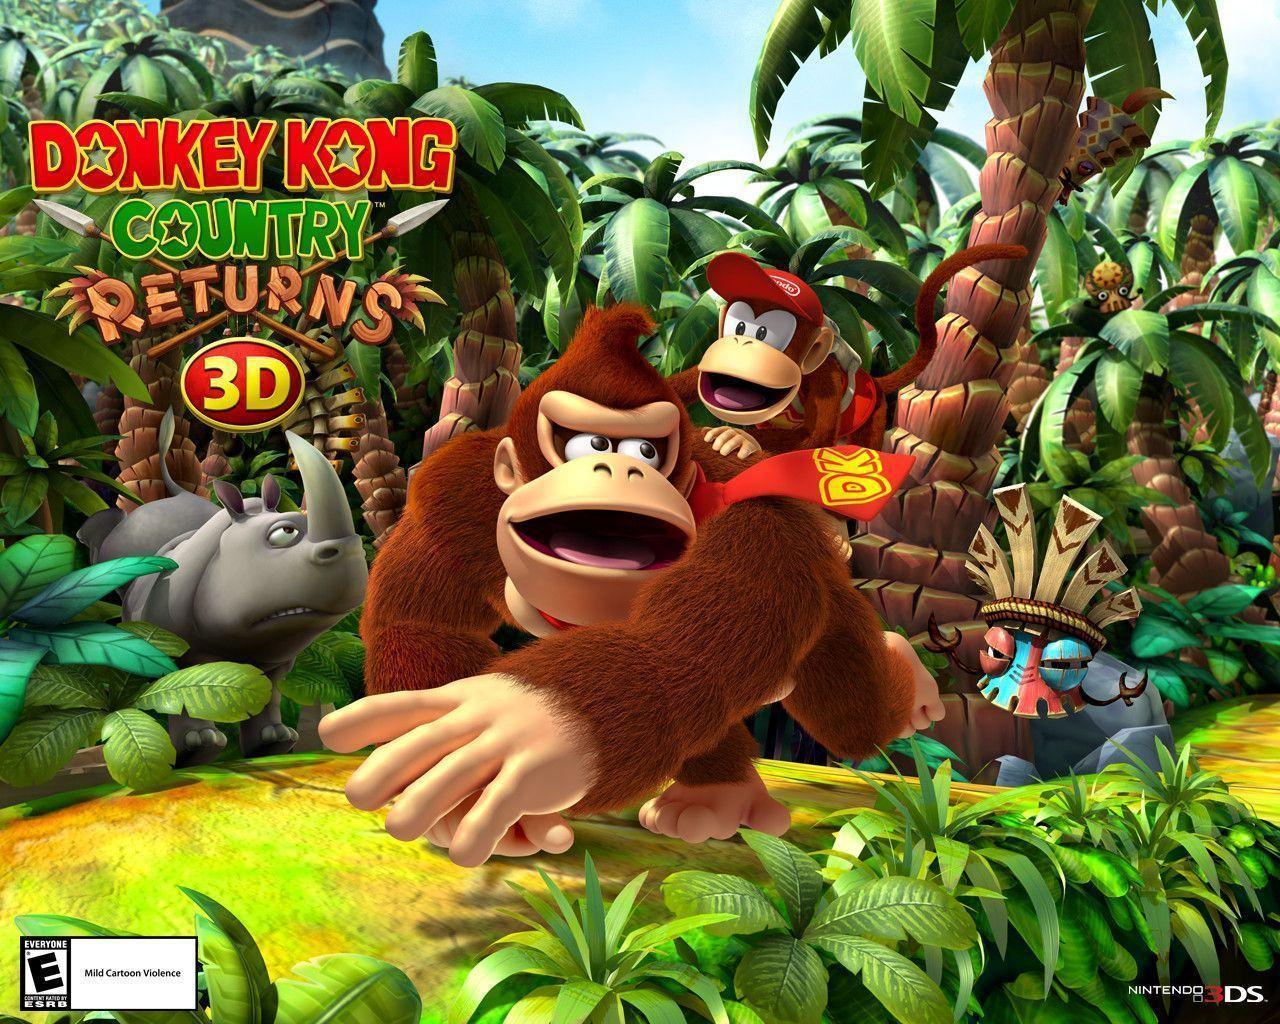 Wallpaper Kong Country Returns 3D for Nintendo 3DS